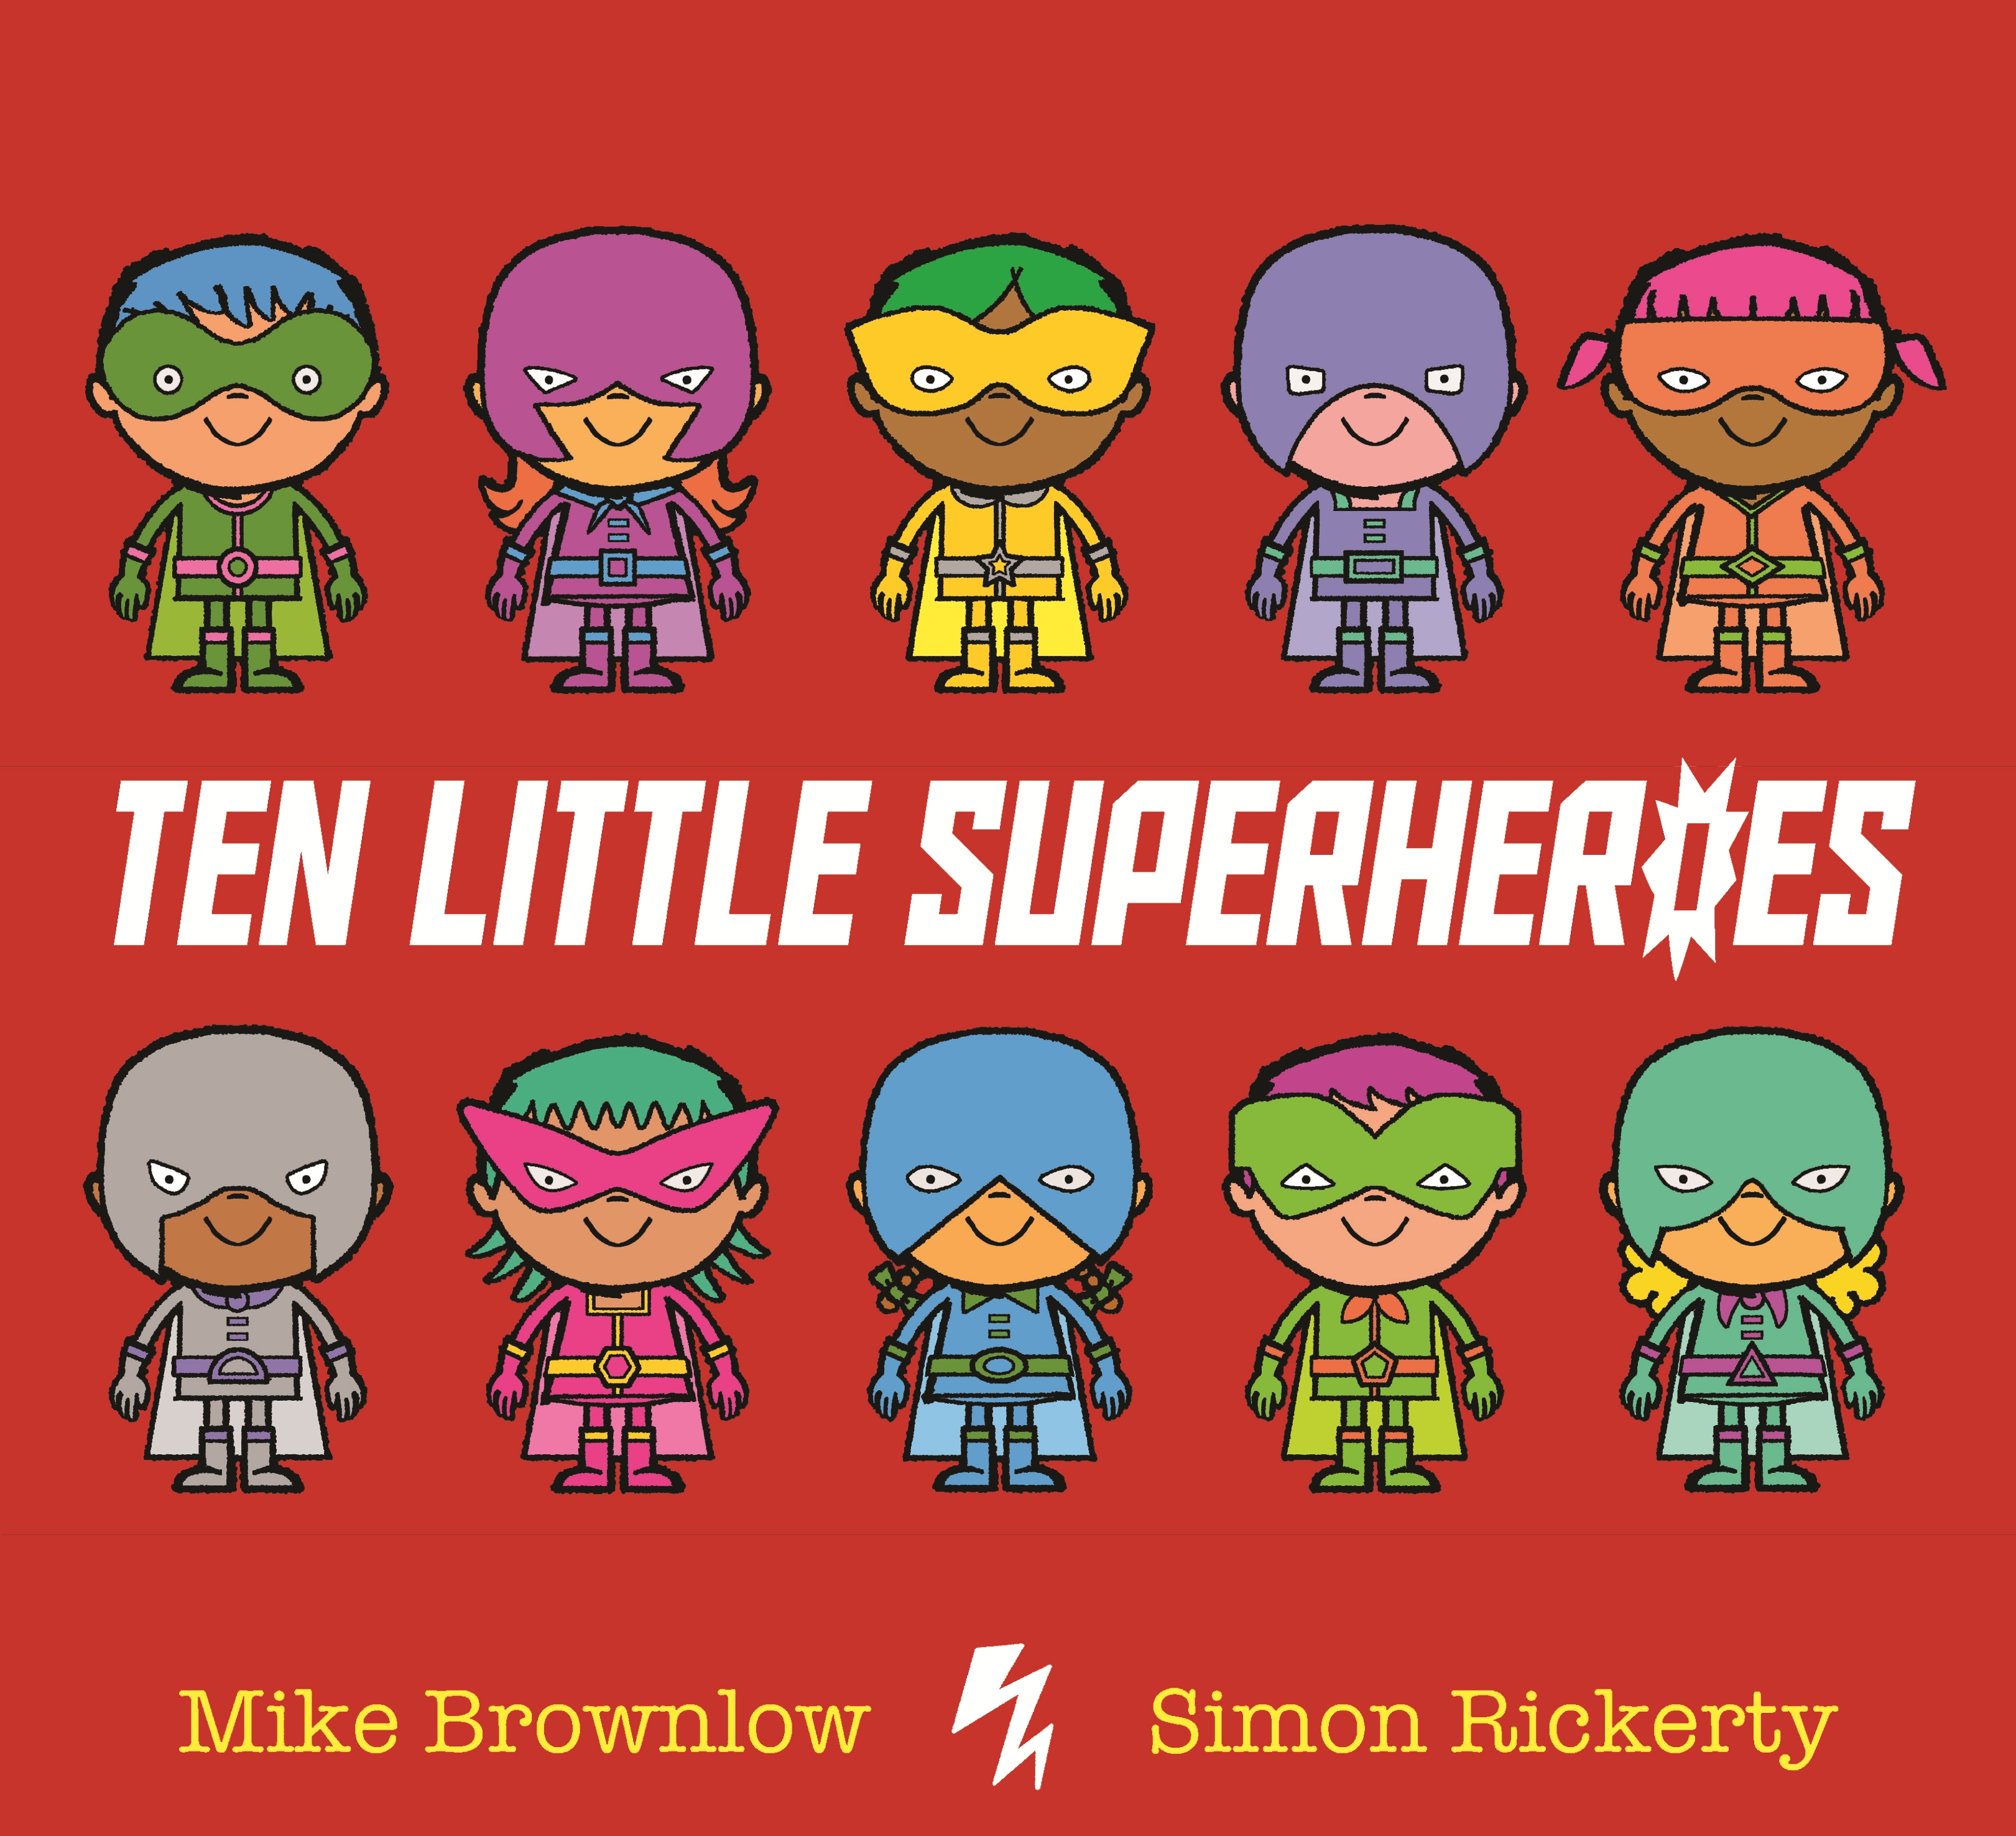 Superhero simon. Супергерои на английском. Майк Браунлоу. Tiny Dreams Five little Superheroes. Ten little Shapes.